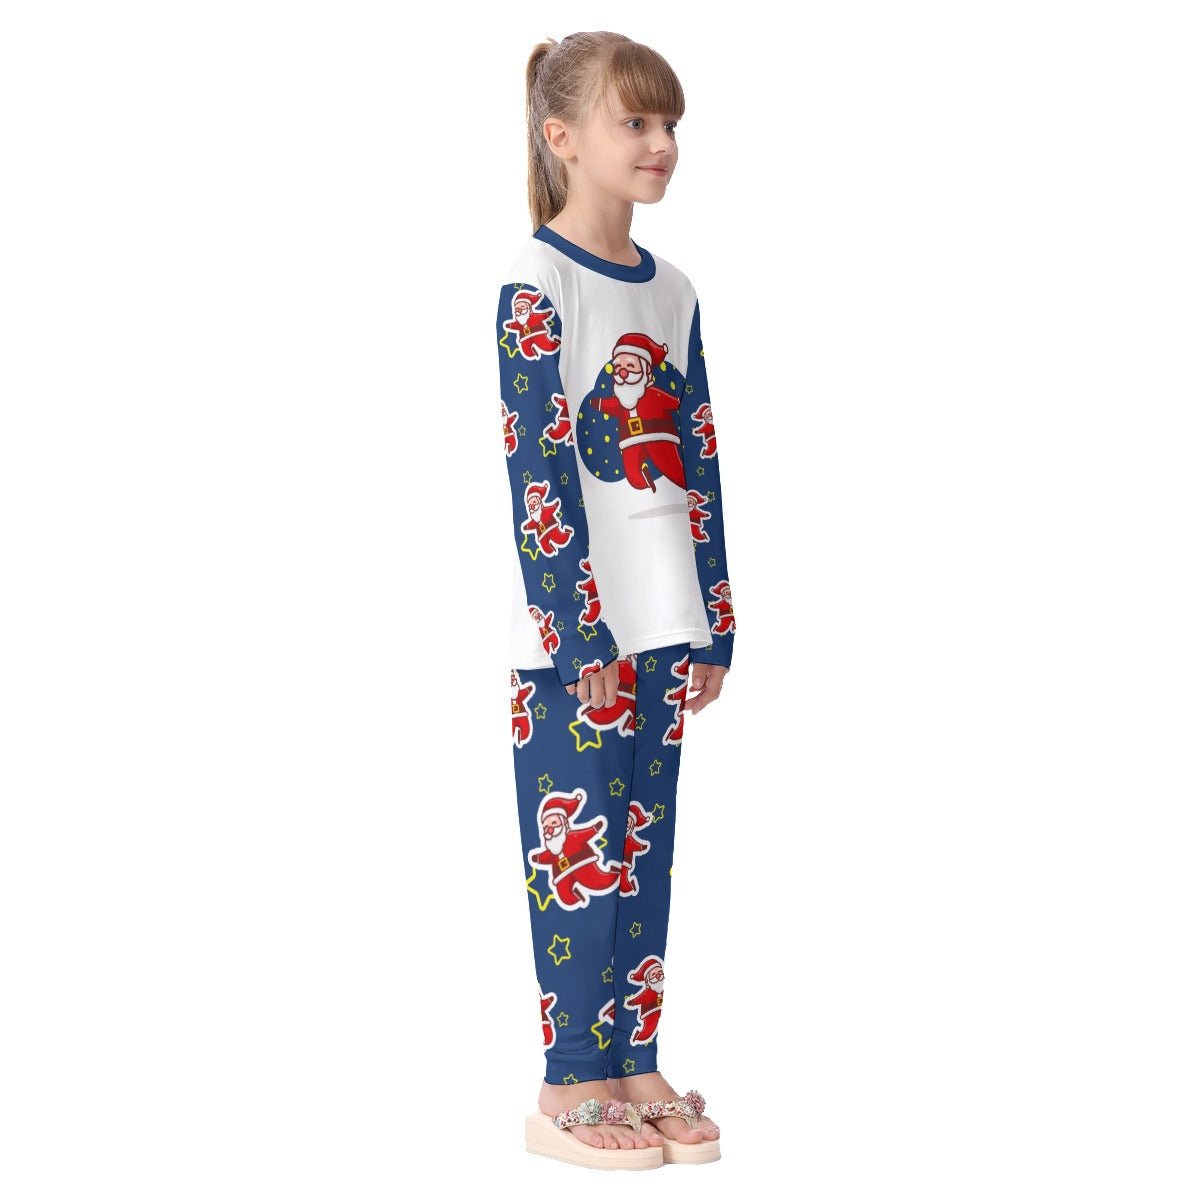 Kids Christmas Pyjama Set - Santa Night Time - Festive Style